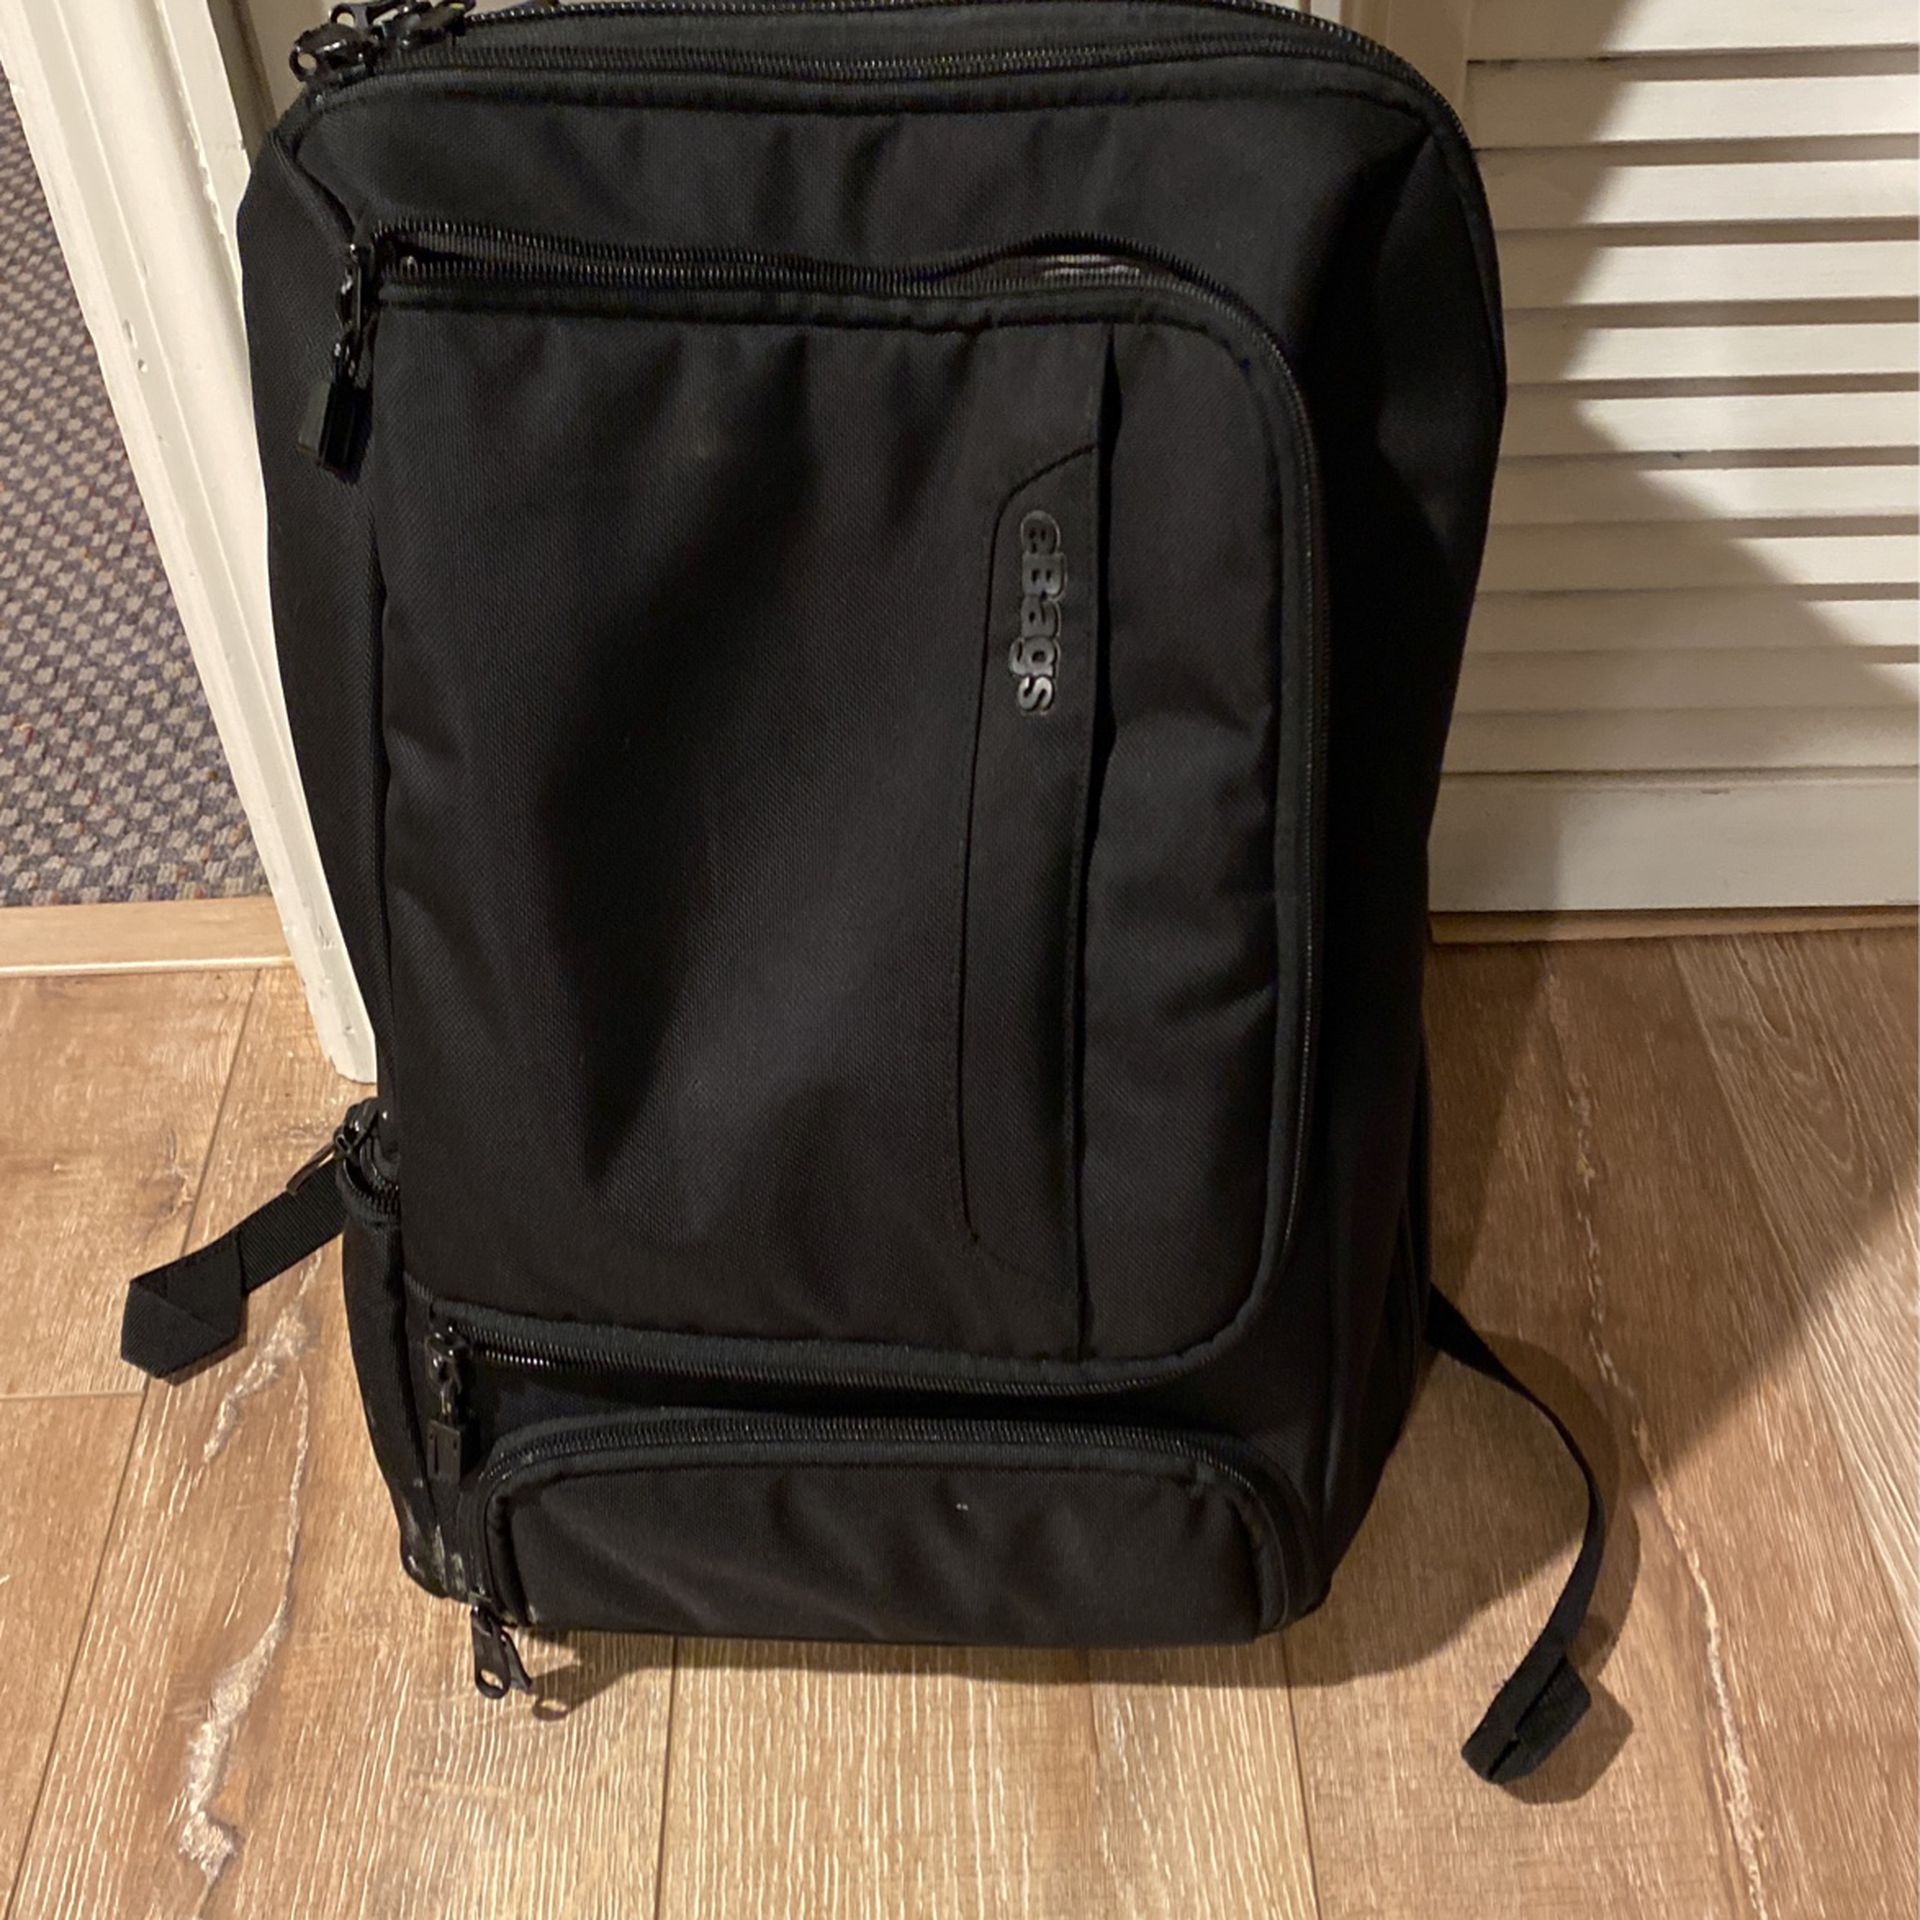 eBag Backpack